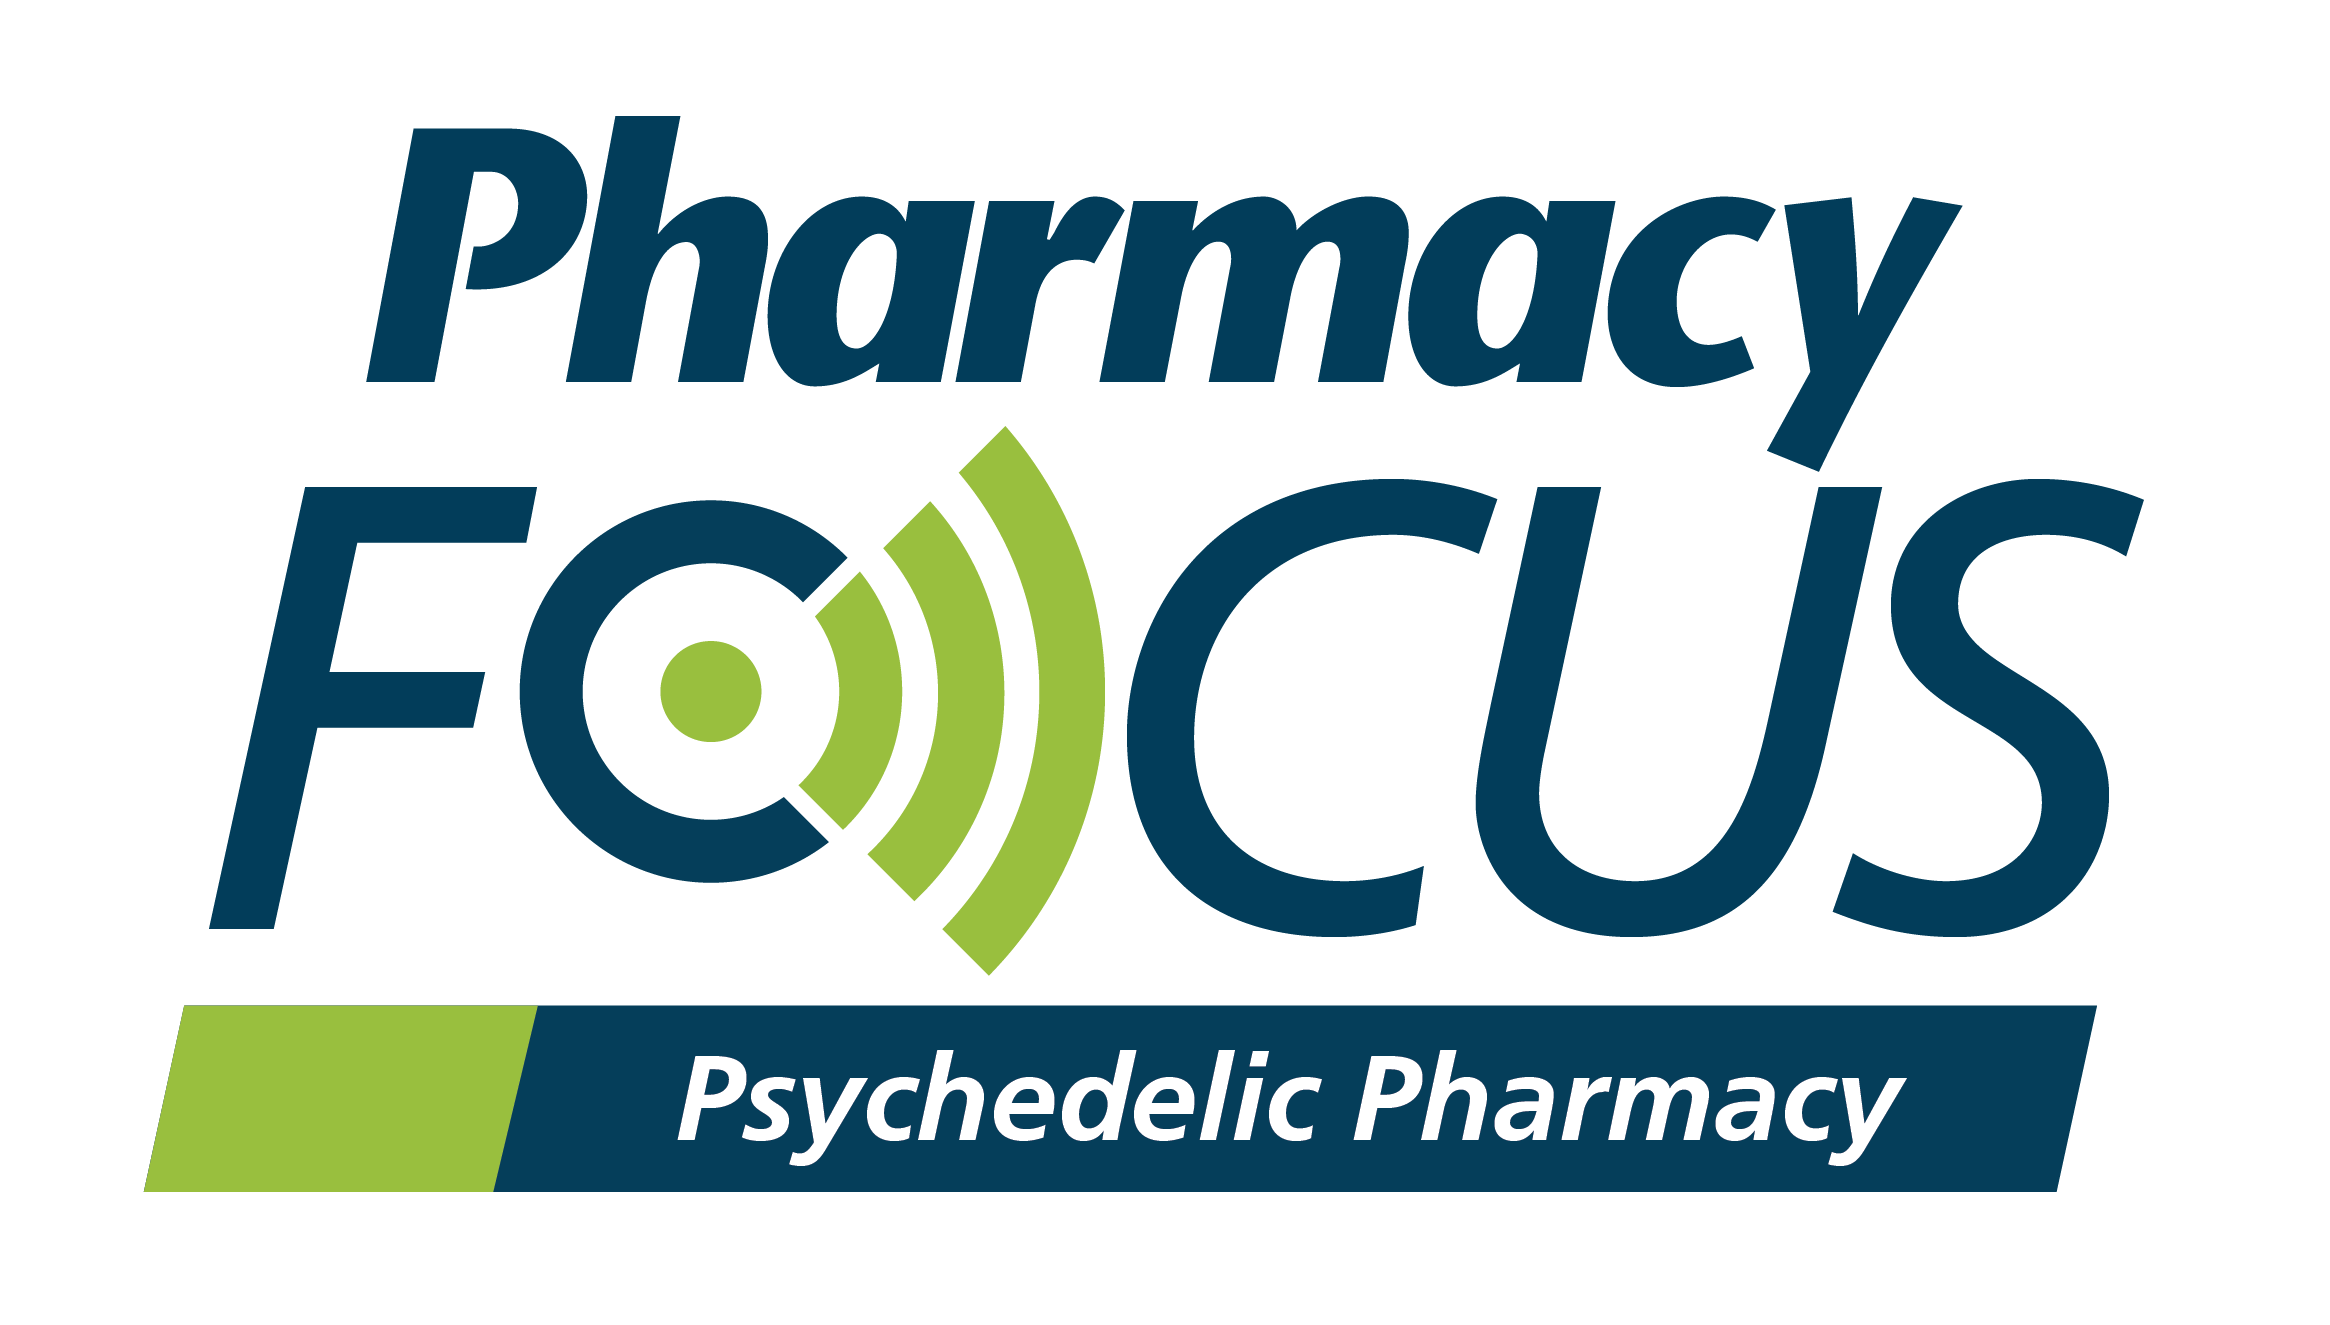 Pharmacy Focus: Psychedelic Pharmacy - Investigating Ketamine for Chronic Pain Management, Addiction Treatment